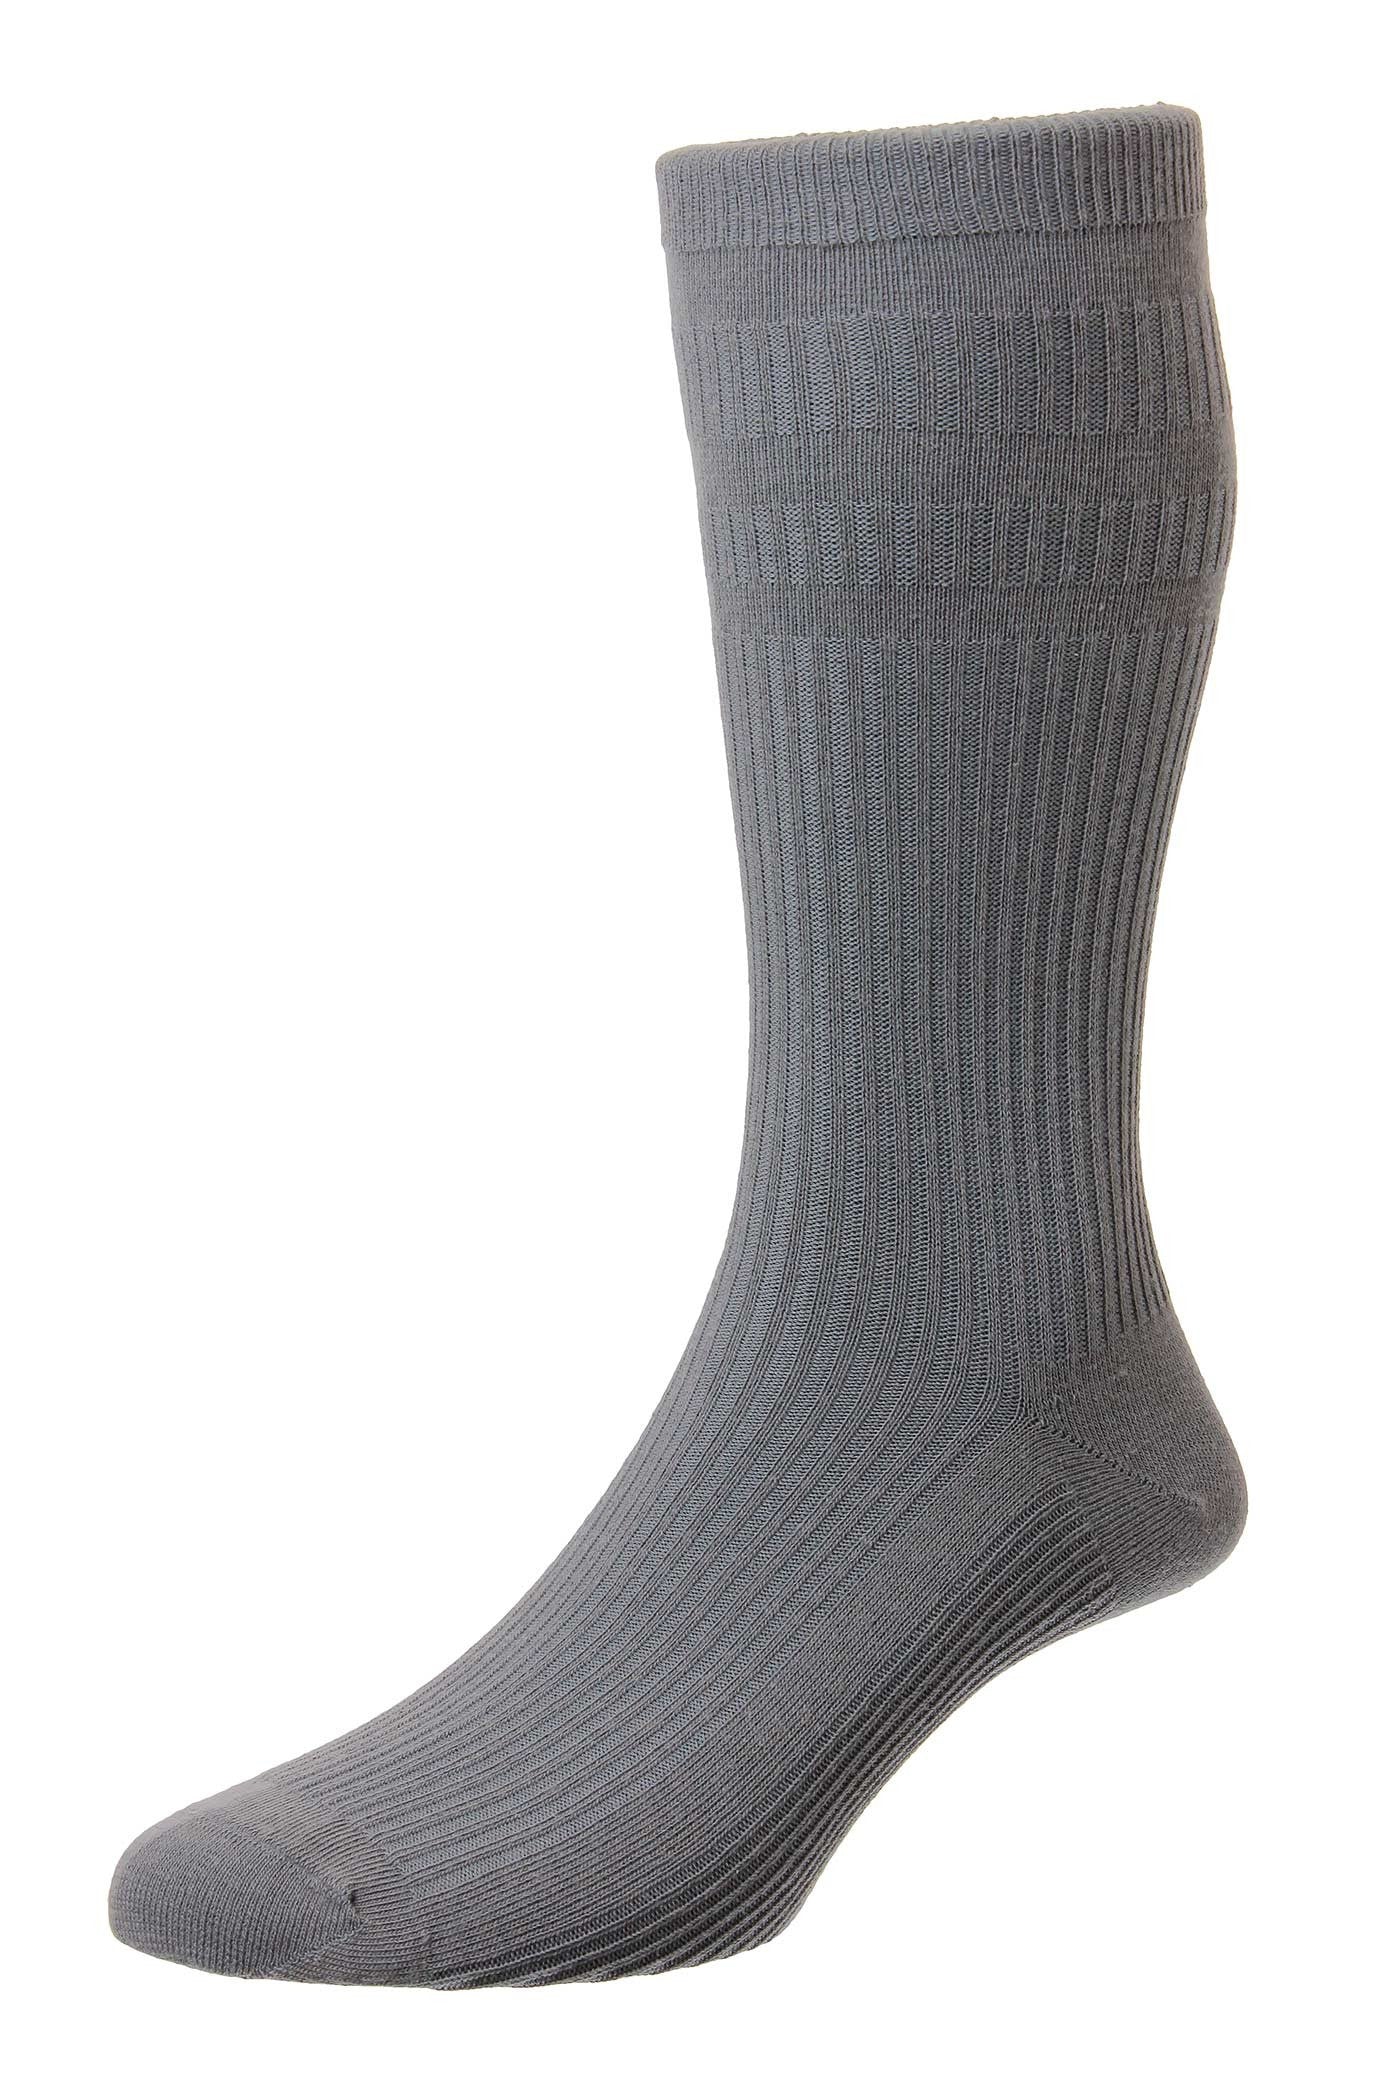 HJ Hall Cotton SoftTop Socks Mid Grey